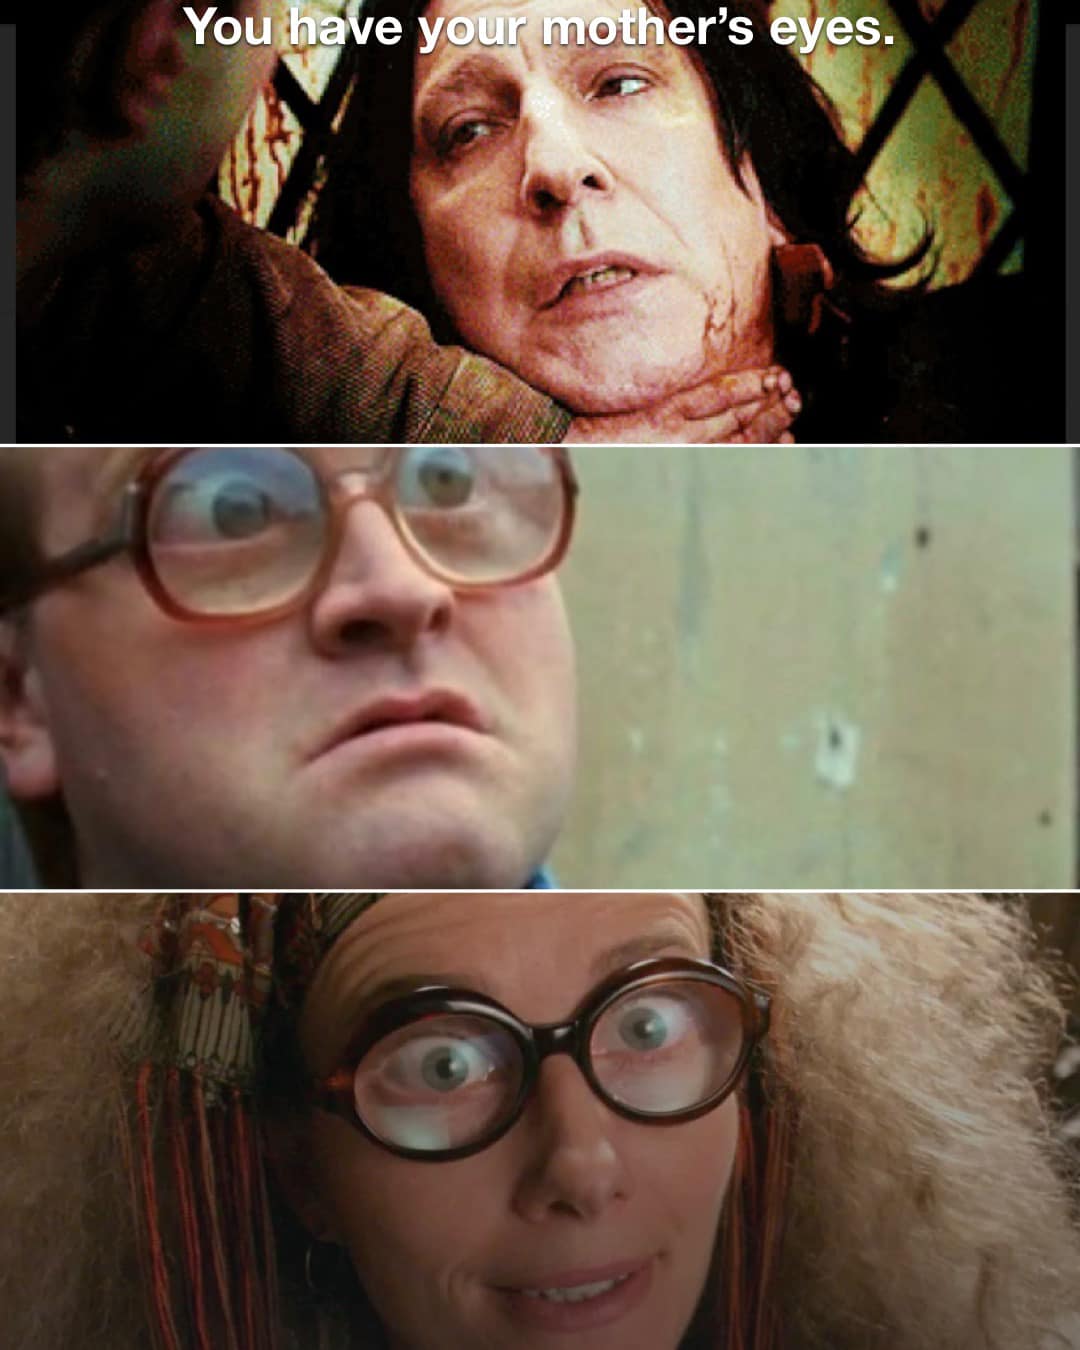 Harry Potter memes - bubbles trailer park boys - You have your mother's eyes.